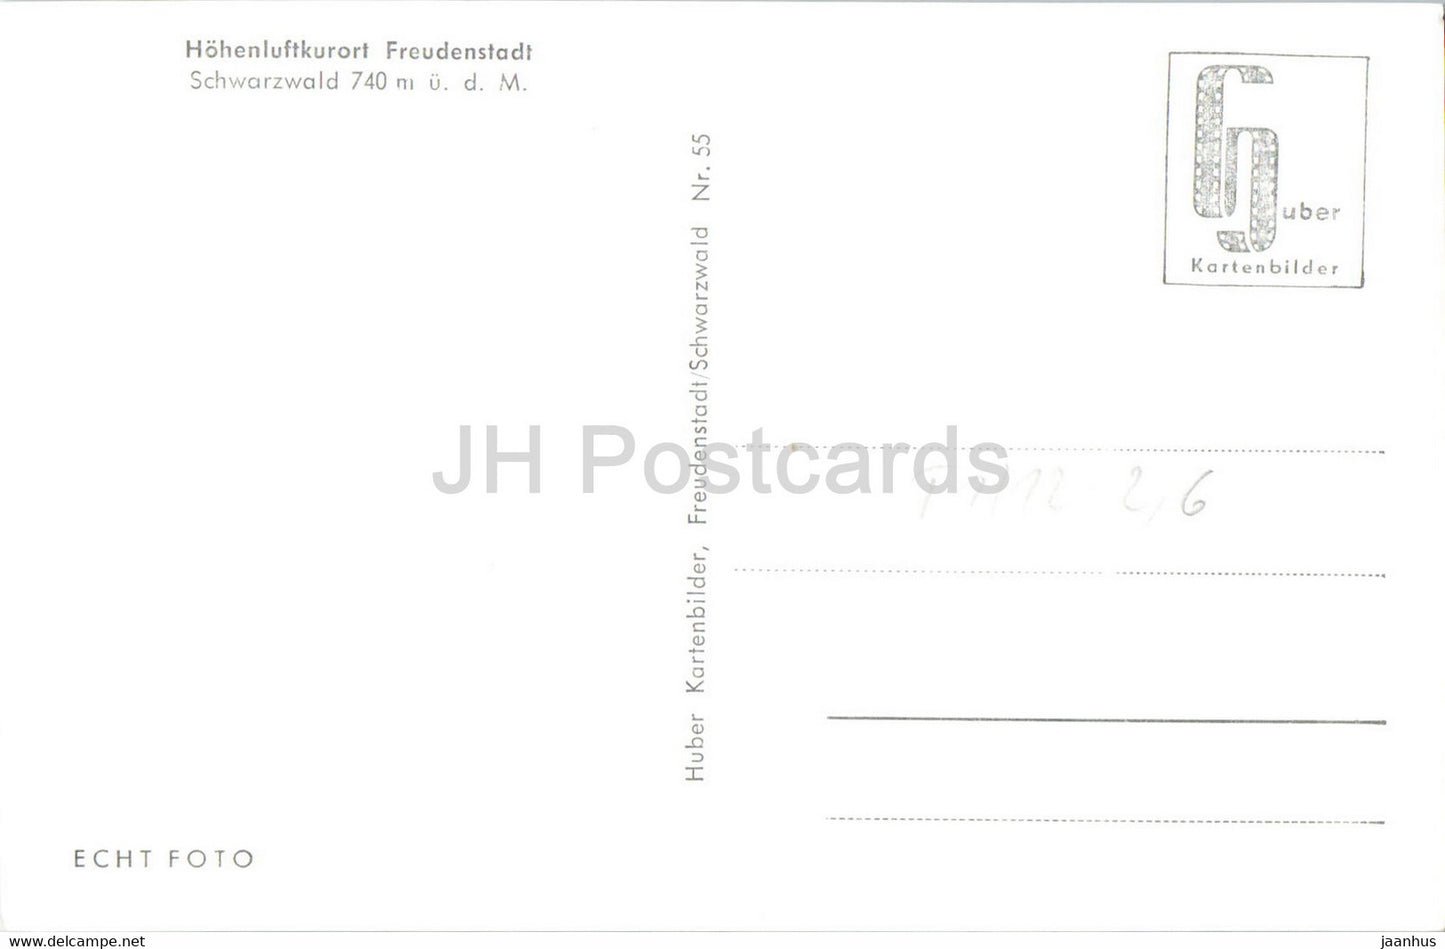 Hohenluftkurort Freudenstadt 740 m - Schwarzwald - old postcard - Germany - unused